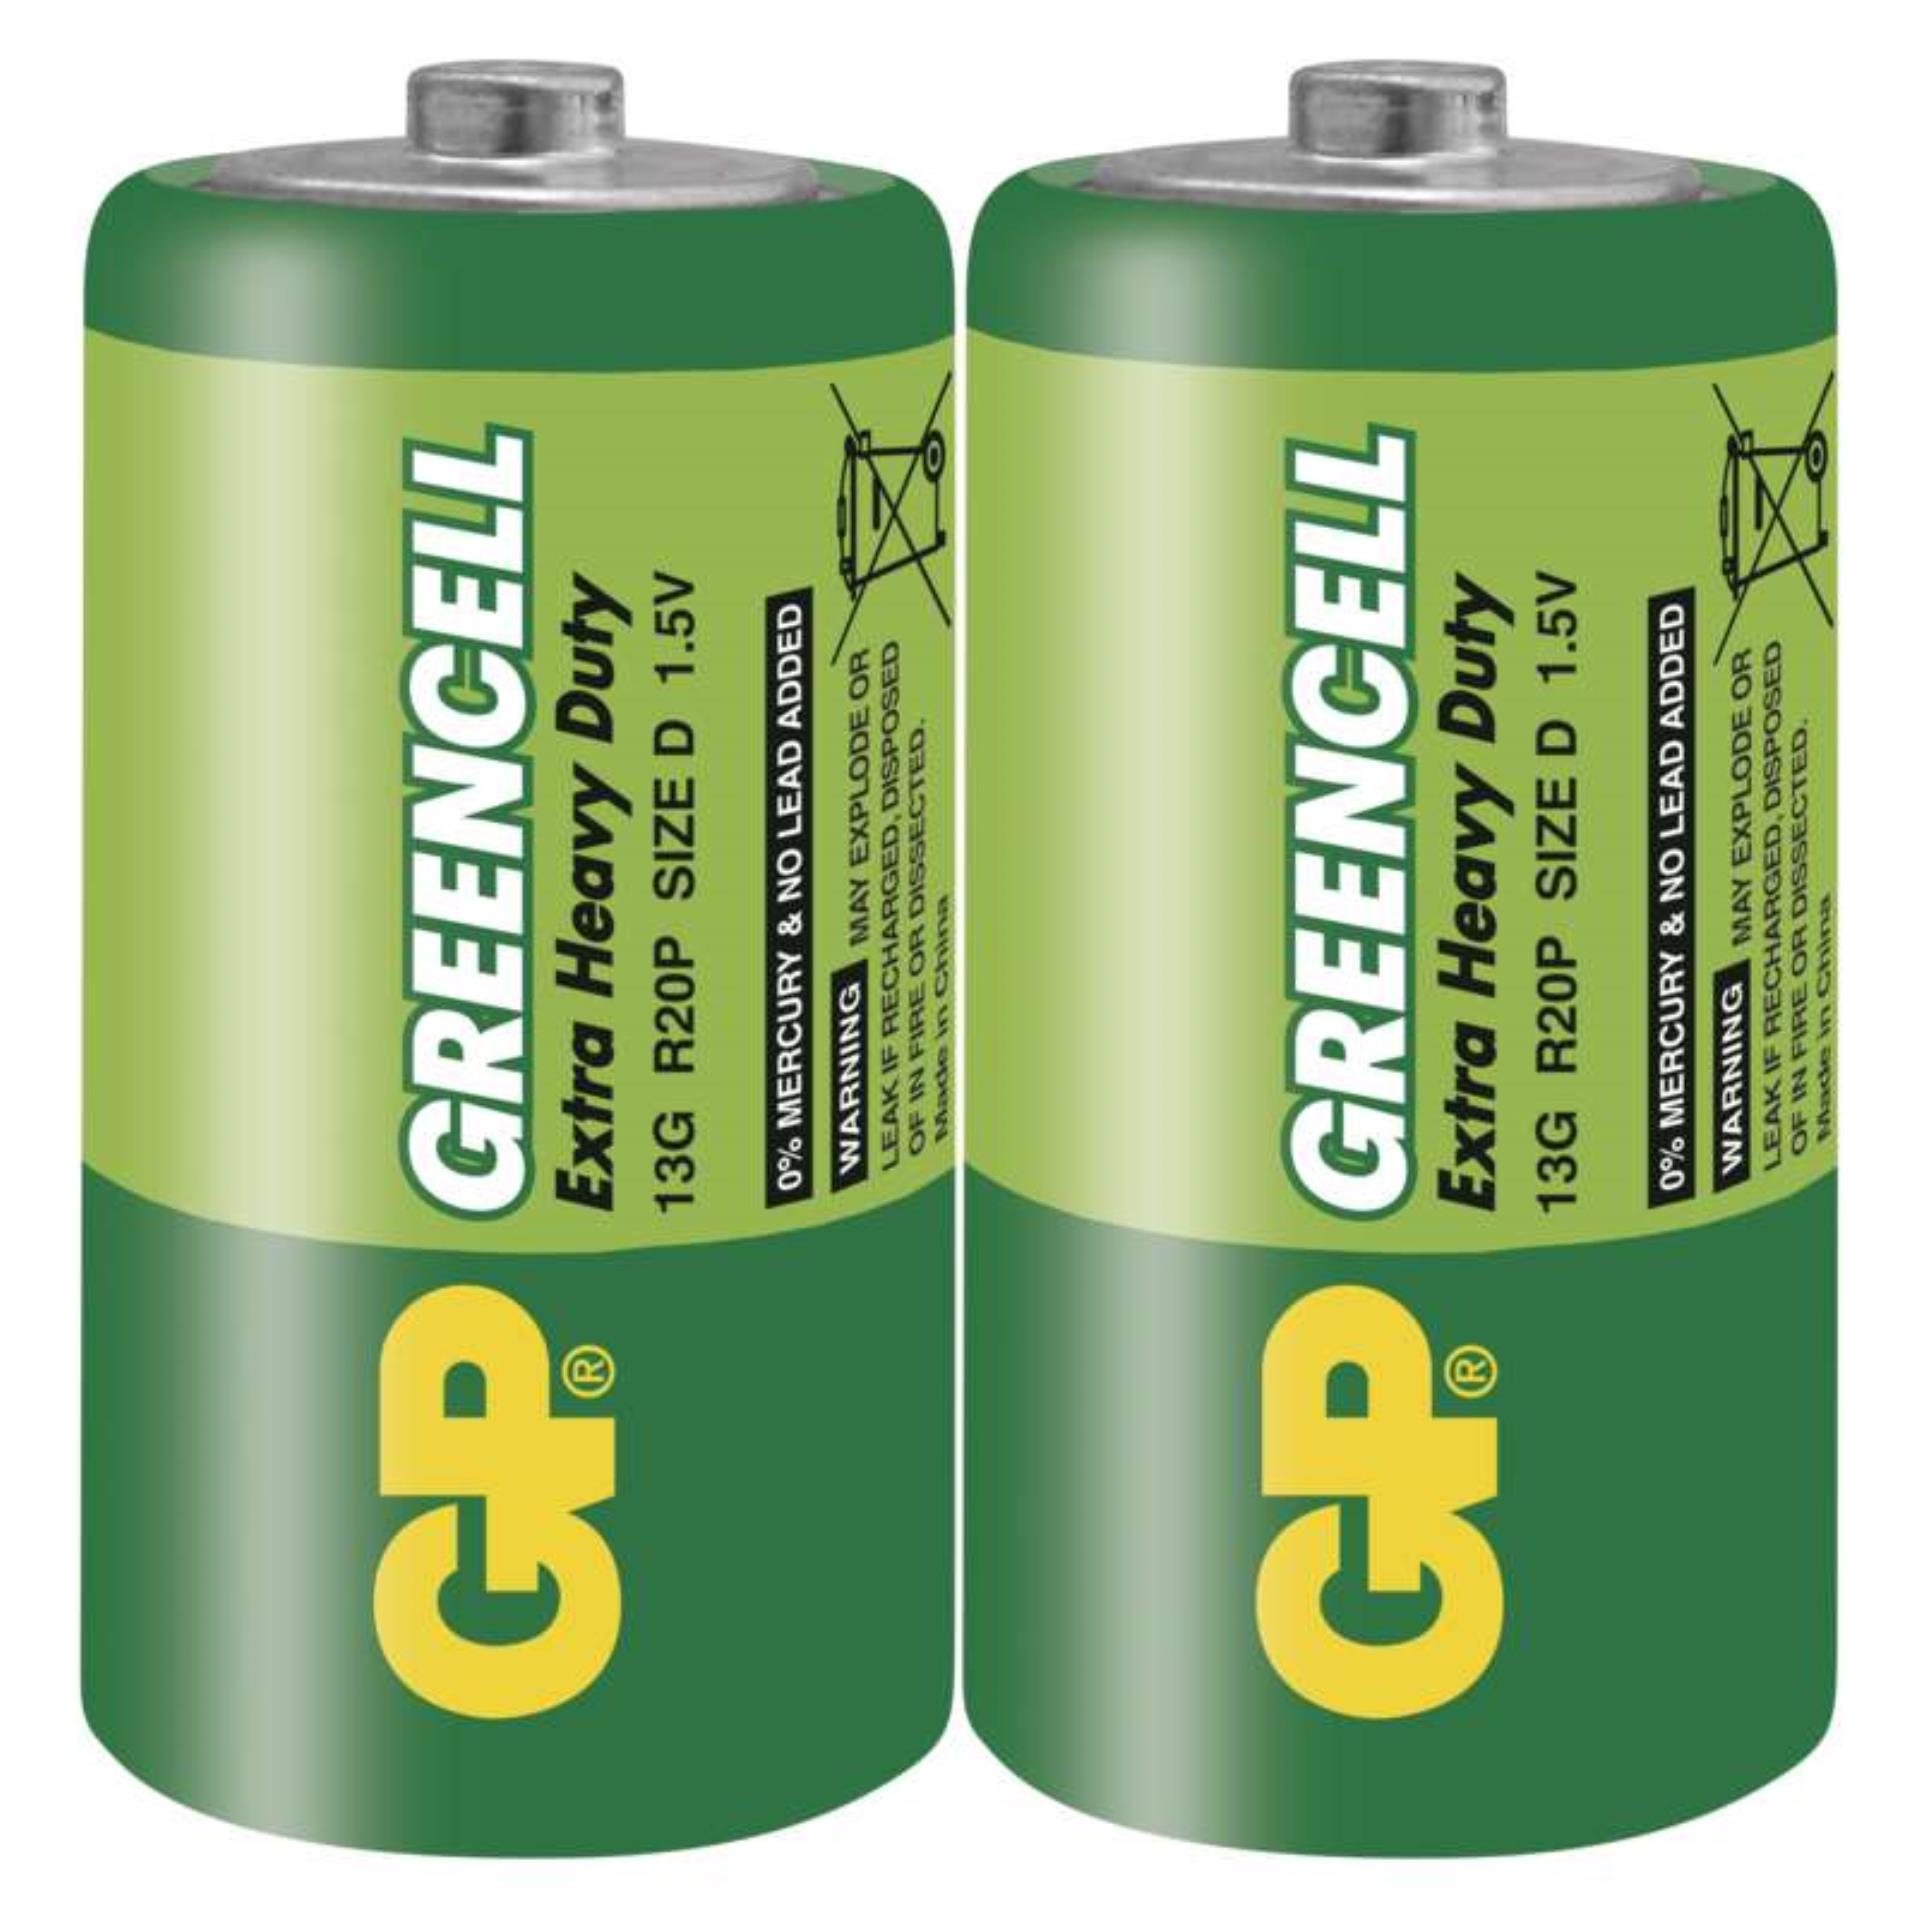 Baterie GP Greencell 1,5 V, R20, typ D, 2 ks